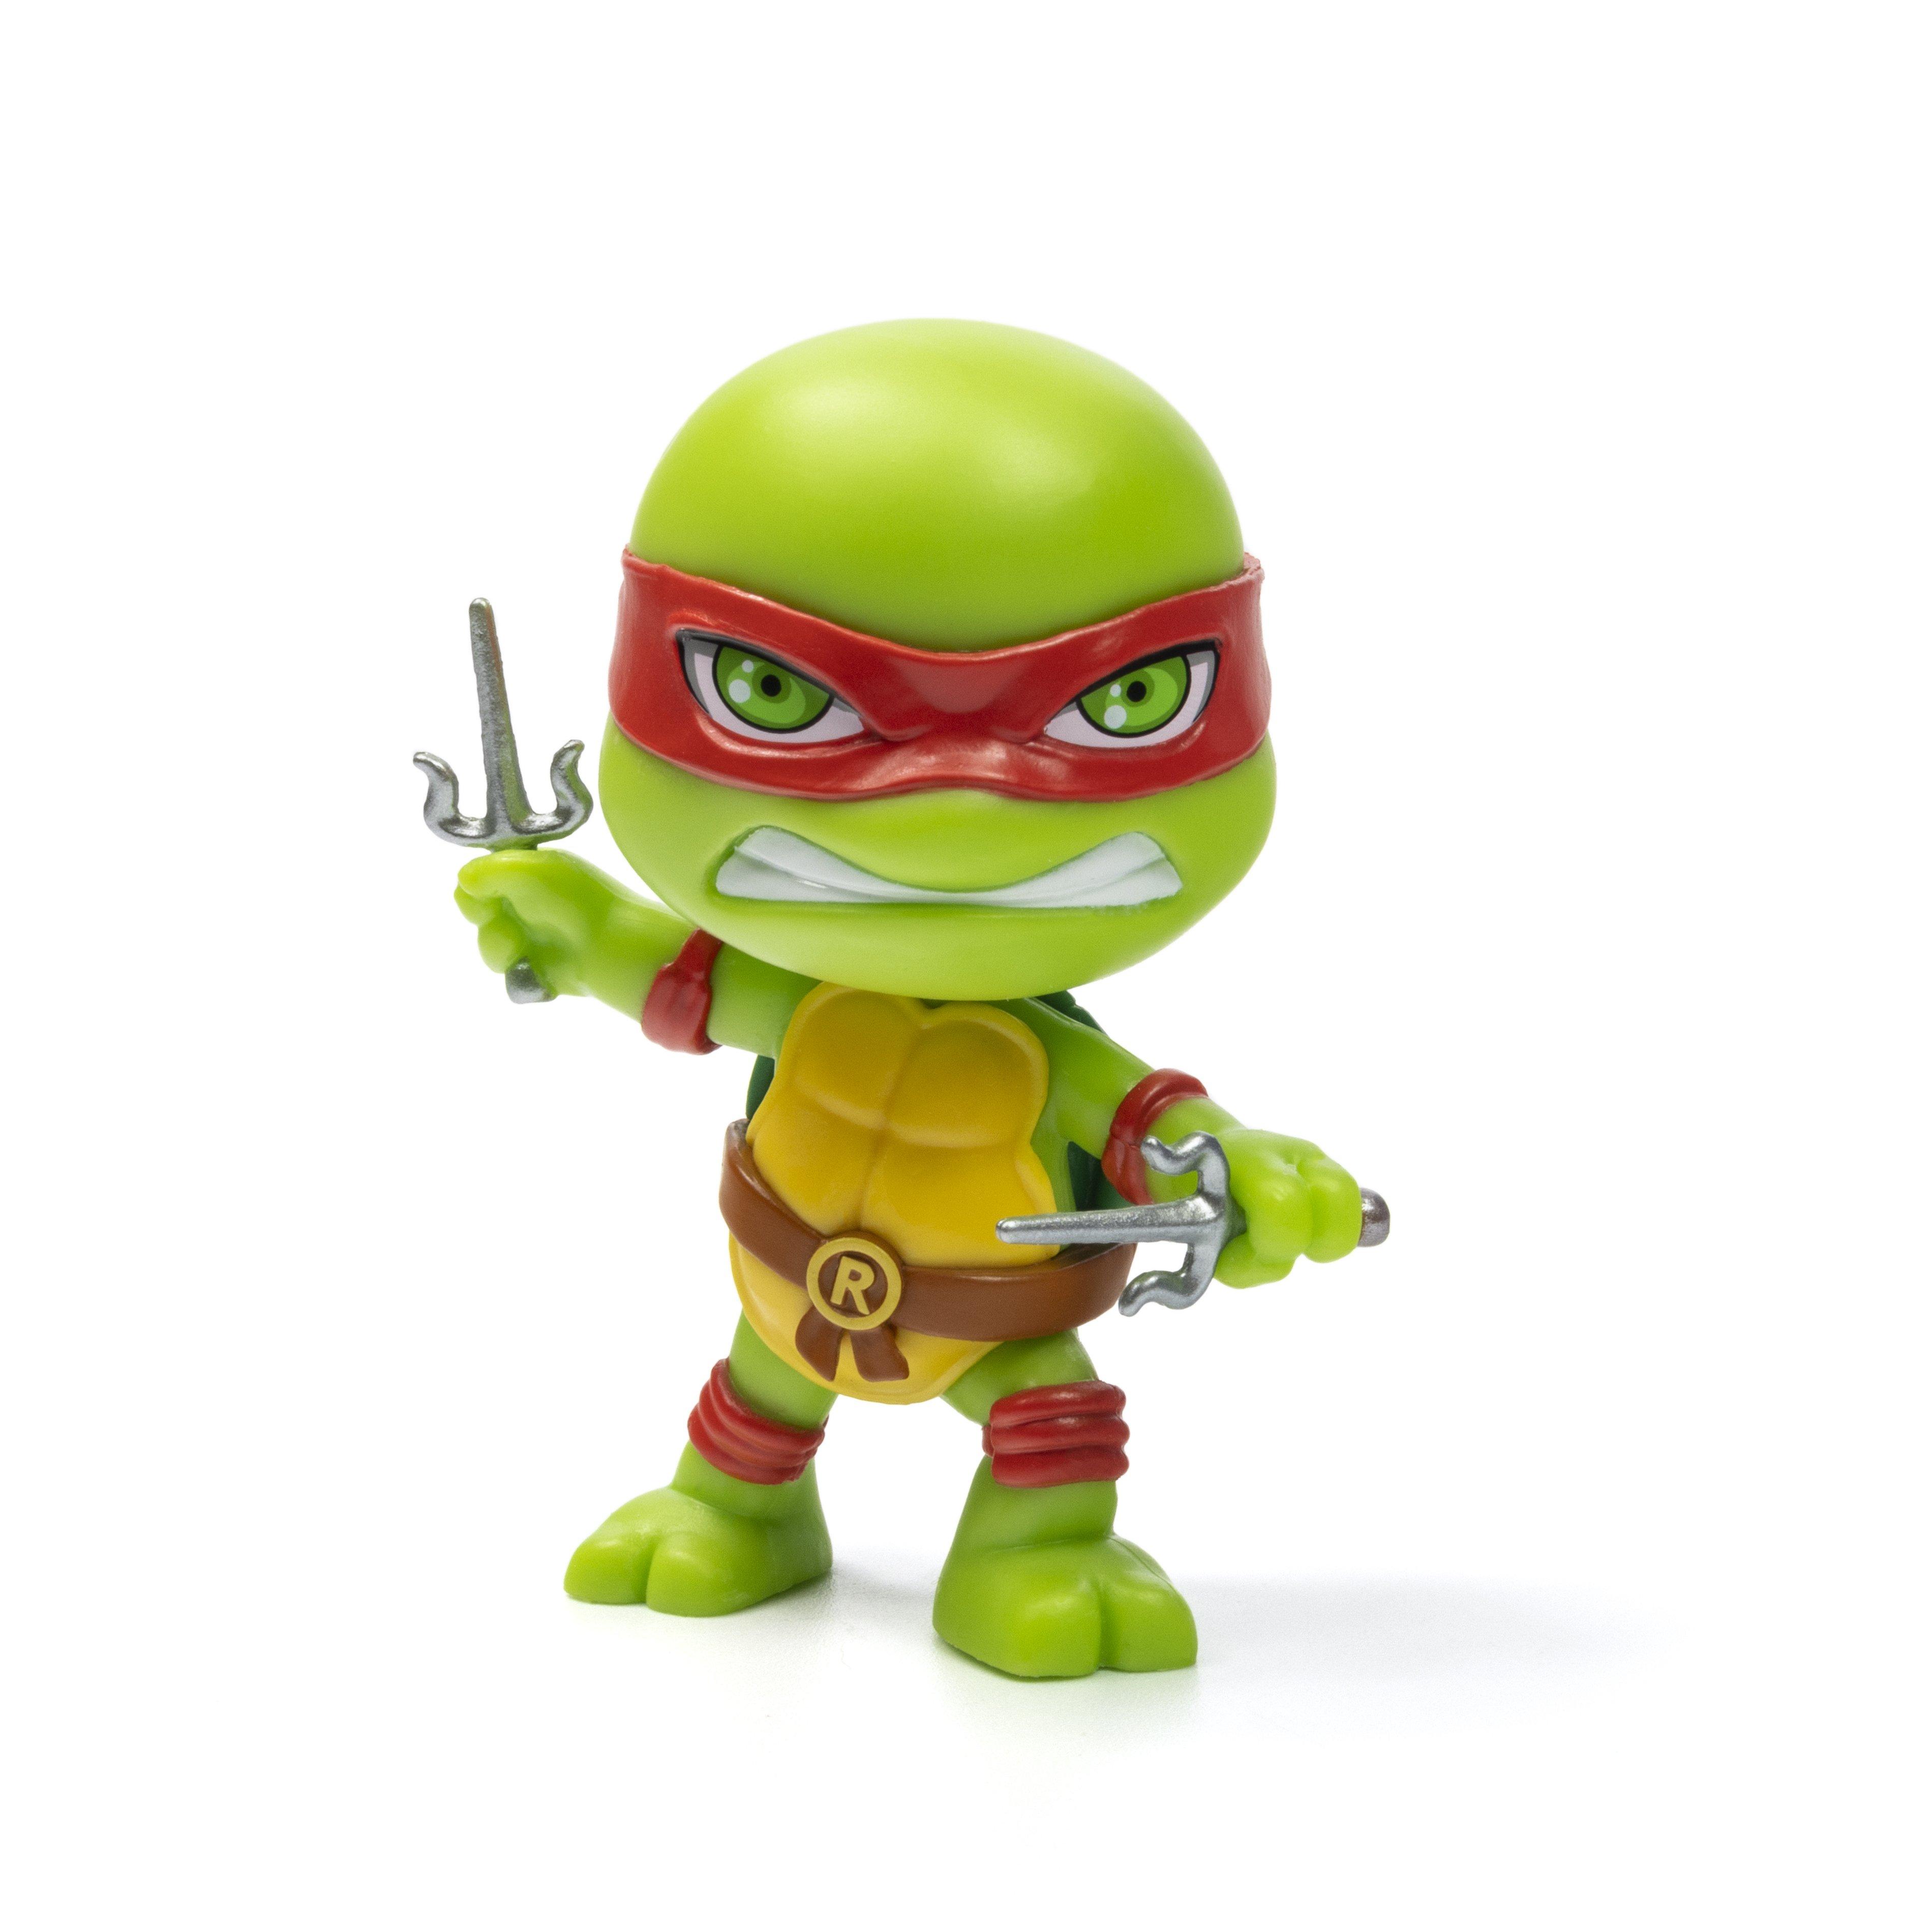 https://media.gamestop.com/i/gamestop/20005742/The-Loyal-Subjects-Teenage-Mutant-Ninja-Turtles-Raphael-CheeBee-3-inch-Figure?$pdp$